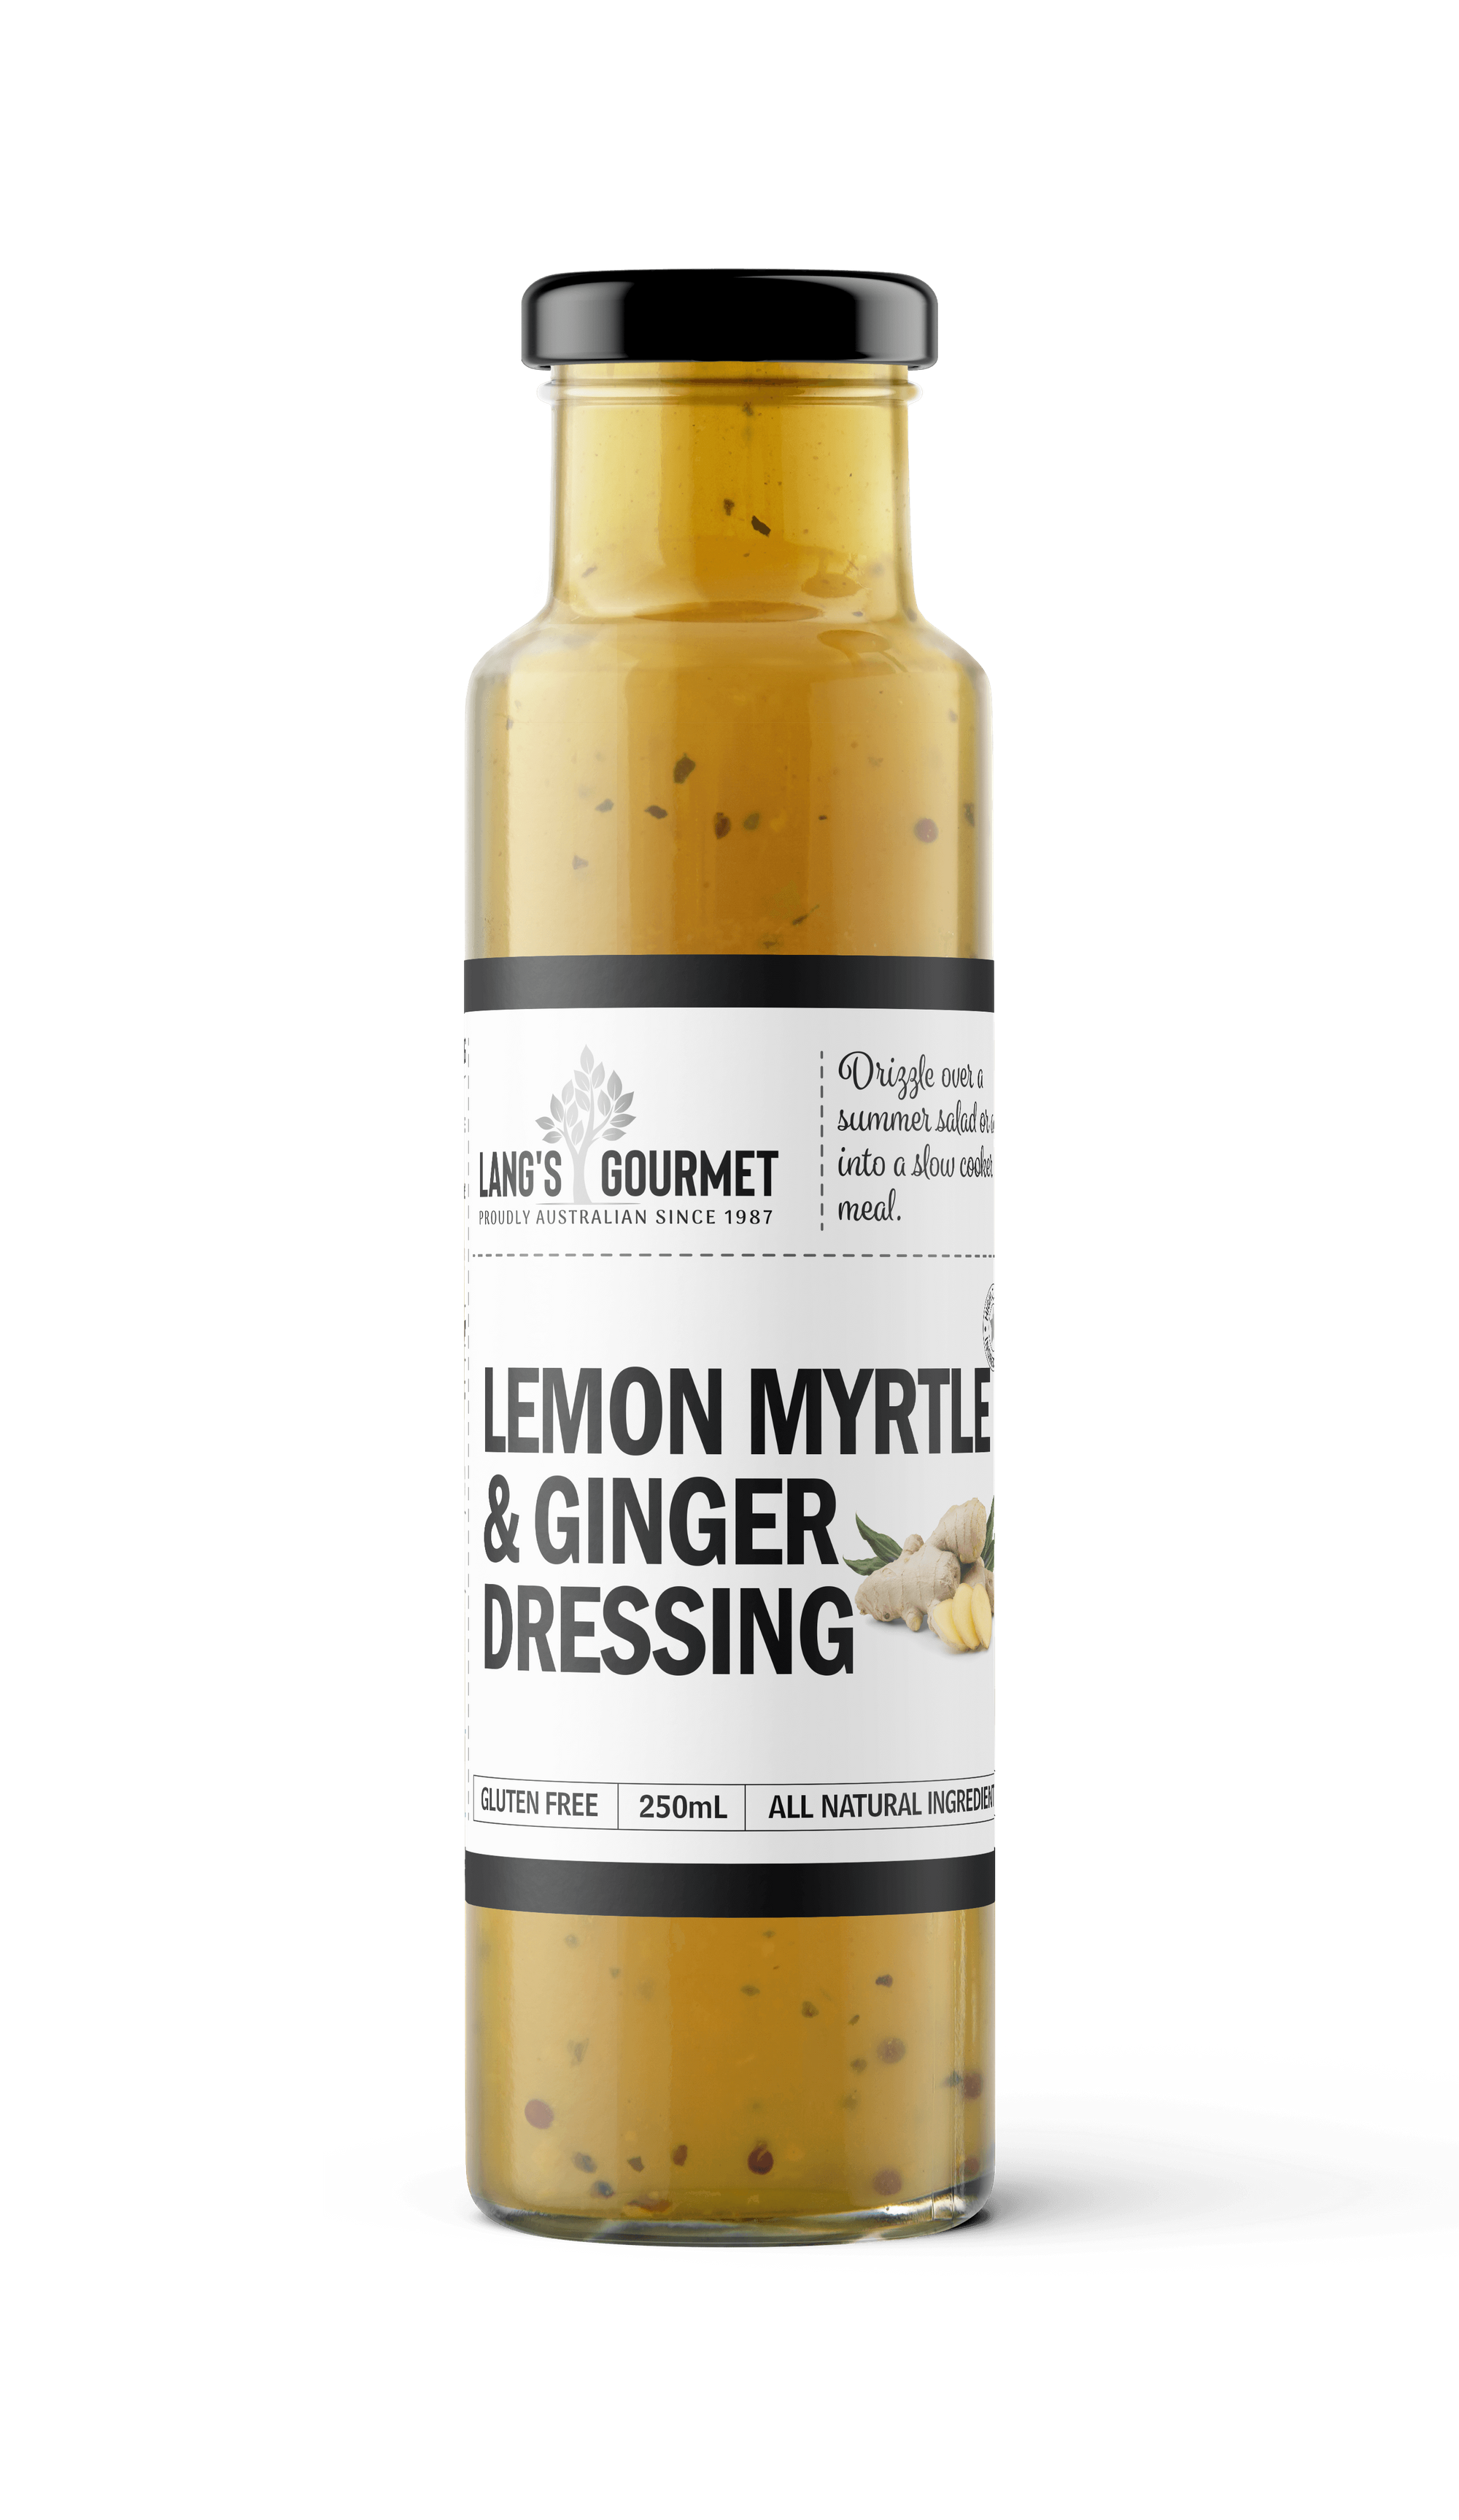 Lang's Gourmet Lemon Myrtle & Ginger Dressing